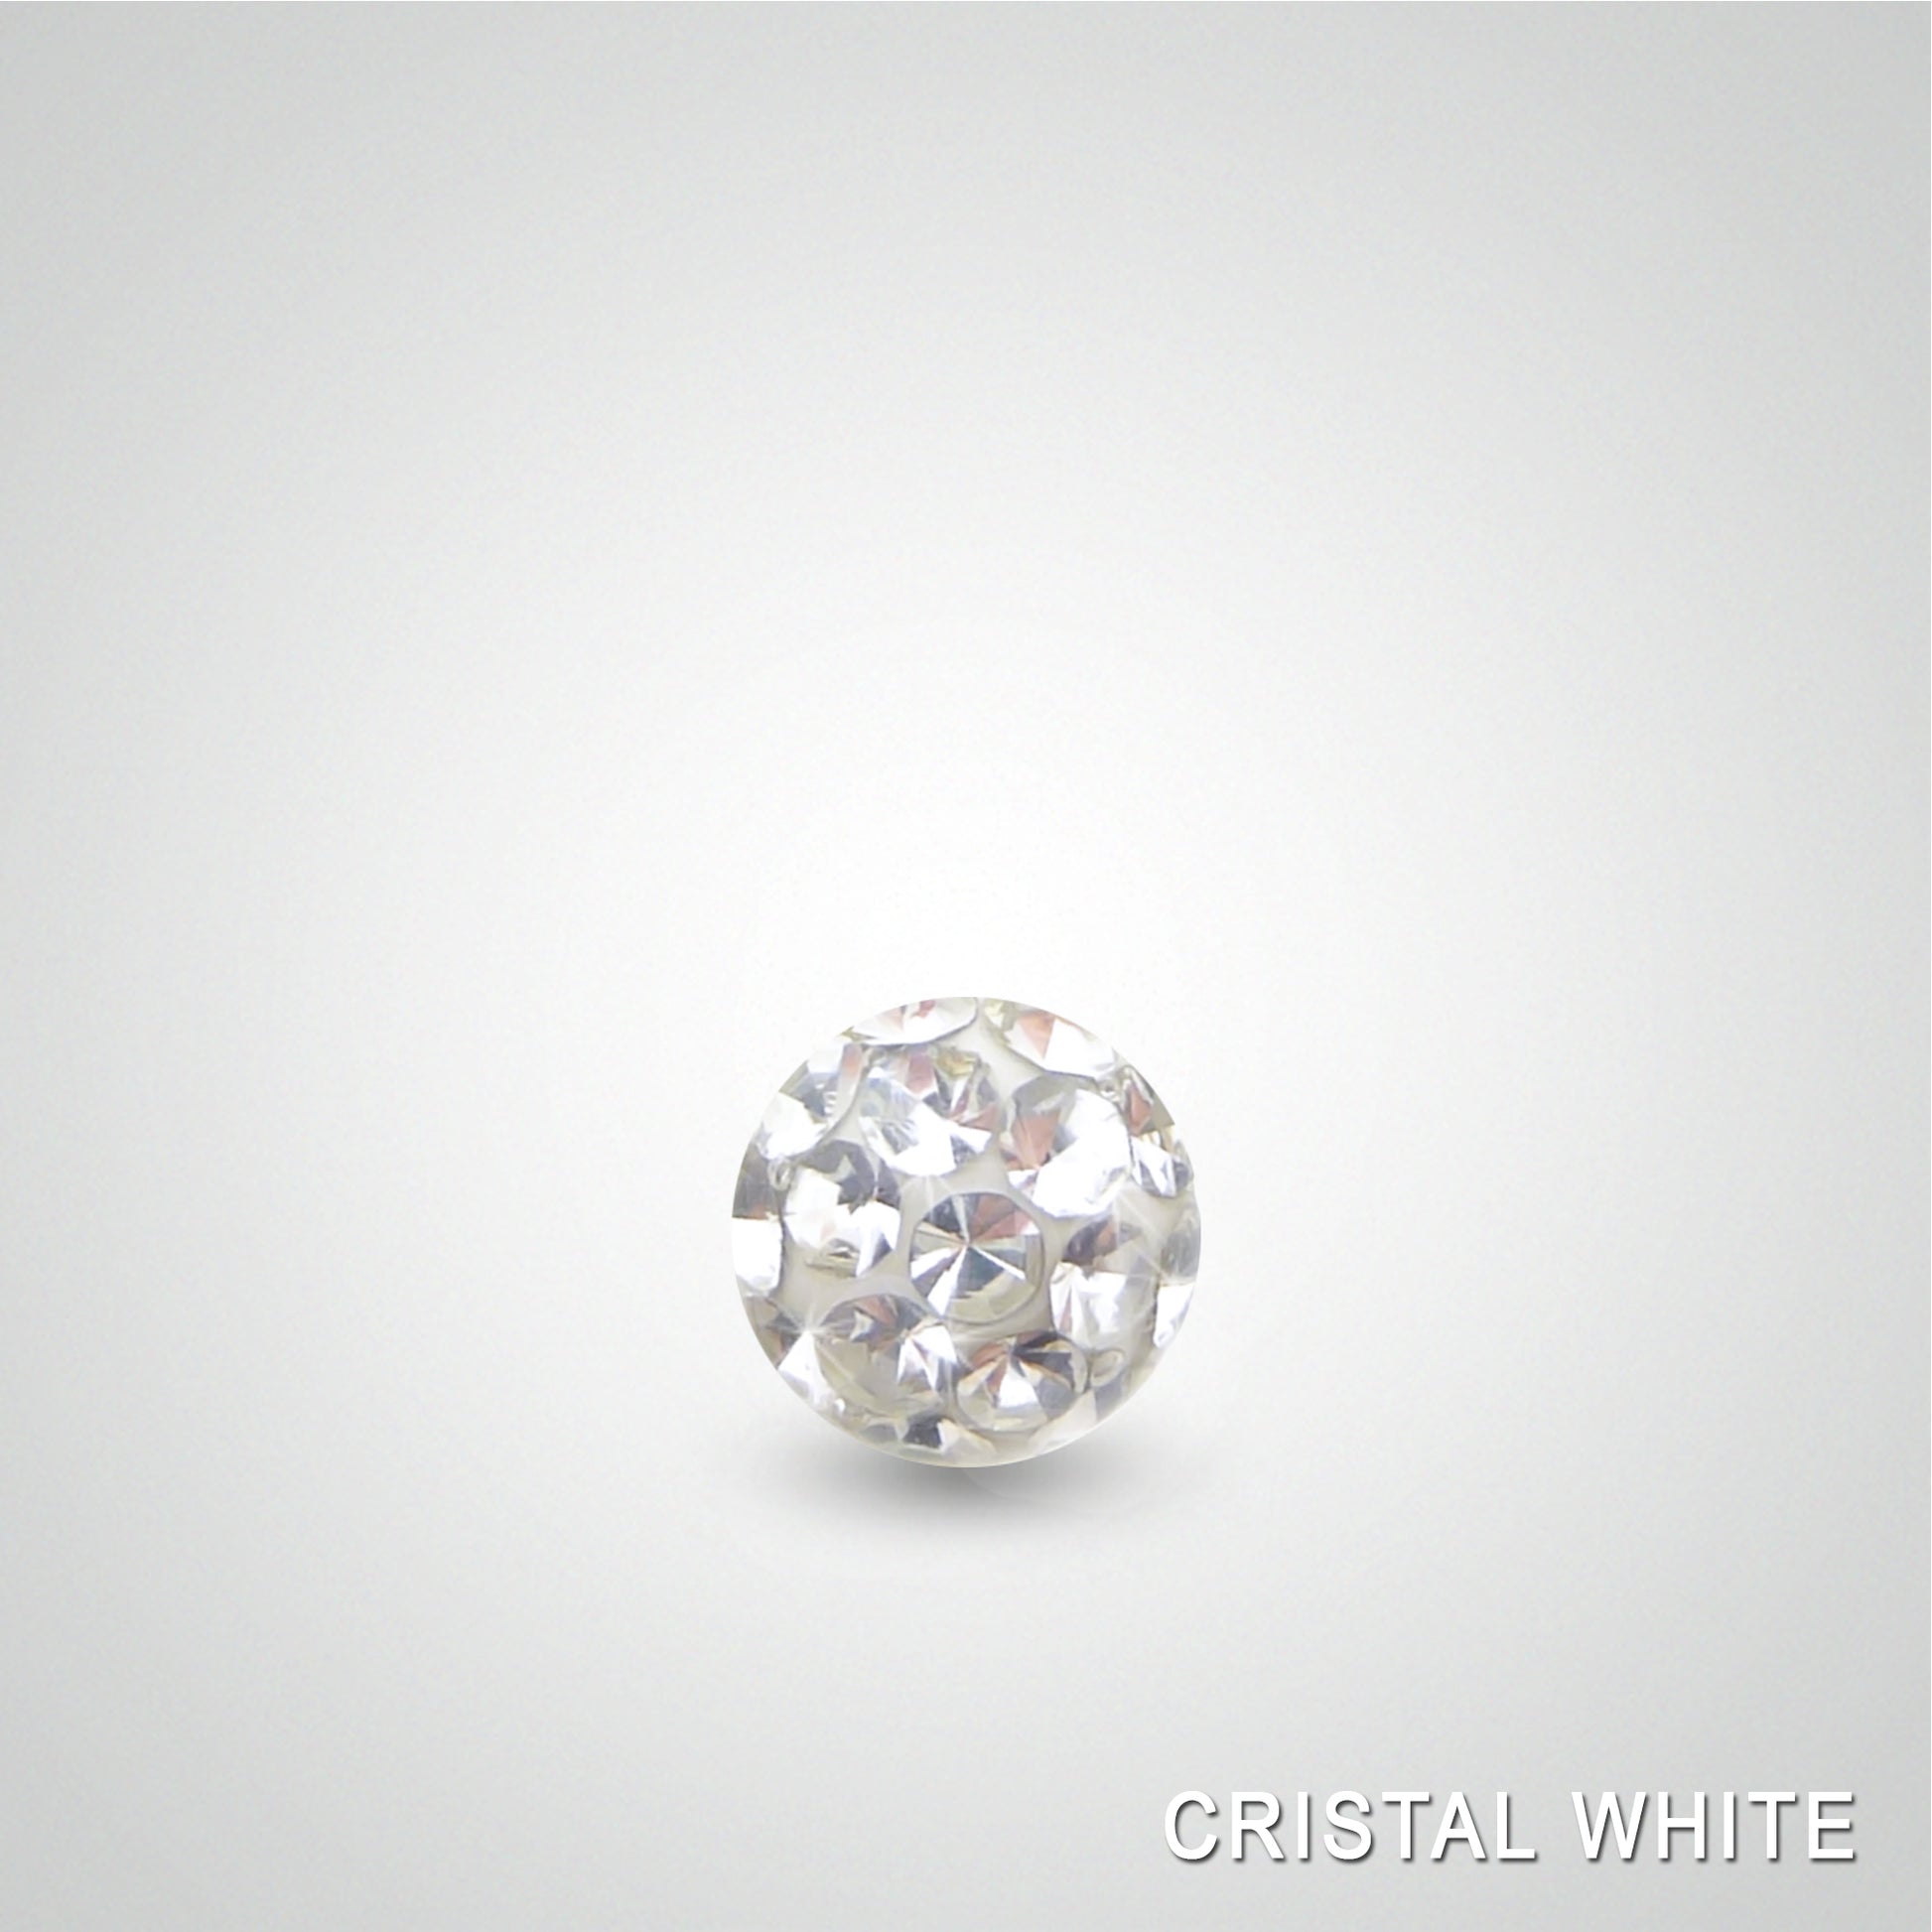 Cristal white